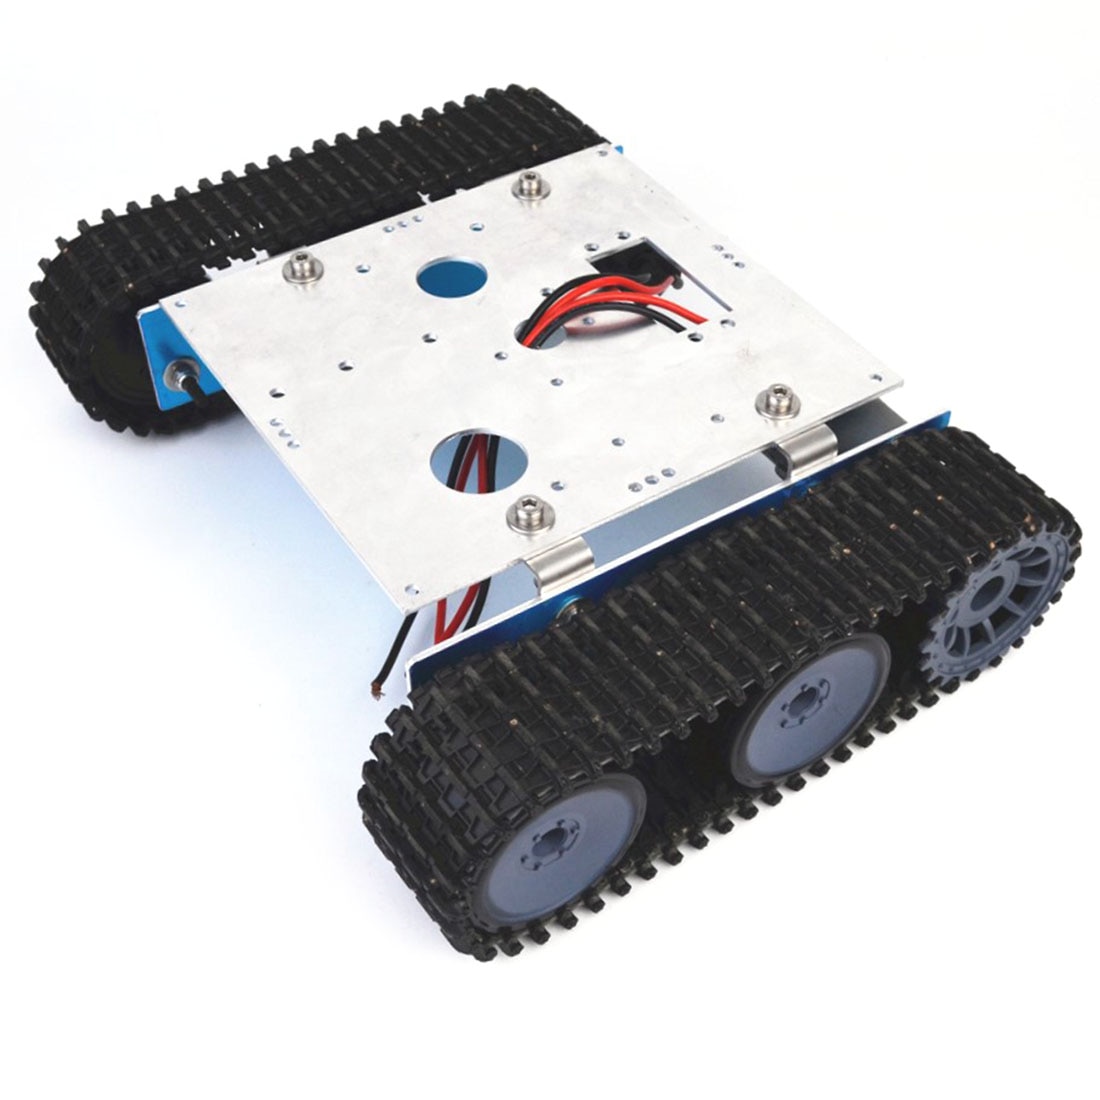 Aluminium Diy Tank Robot Rups Voertuig Platform Chassis Assembly Kit Voor Arduino